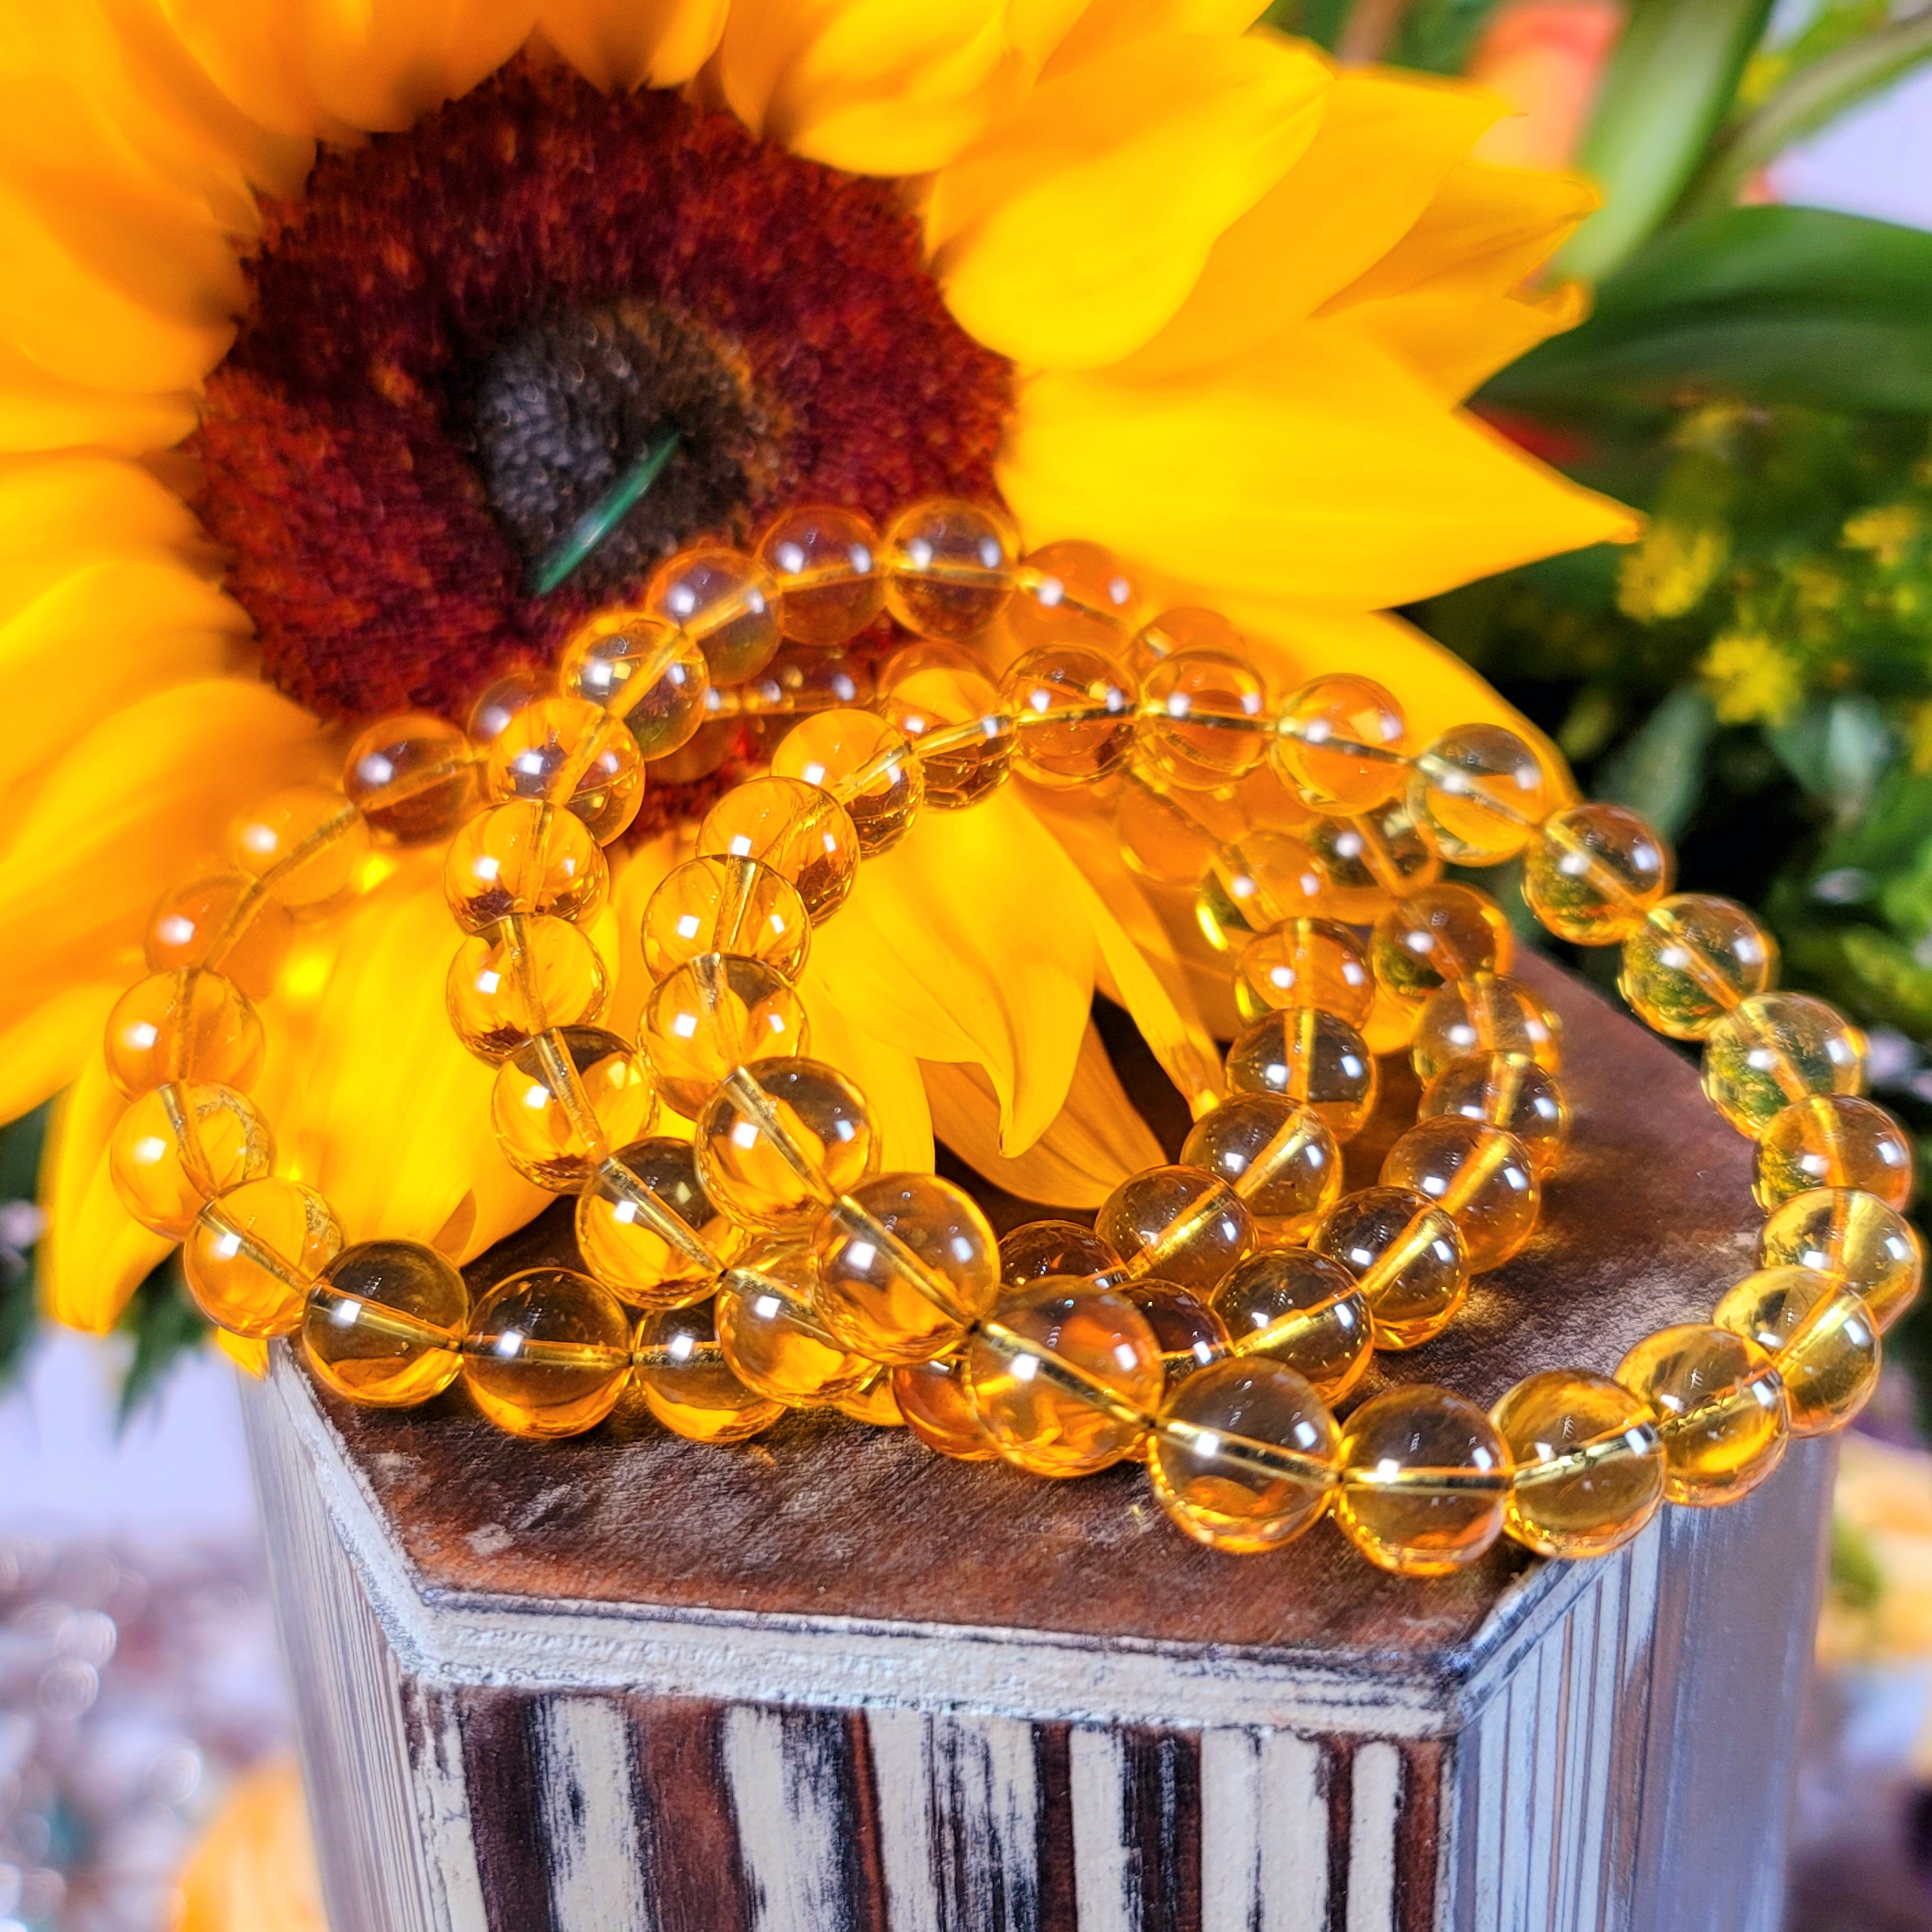 Baltic Amber Bracelet (High Quality) for Joy and Optimism